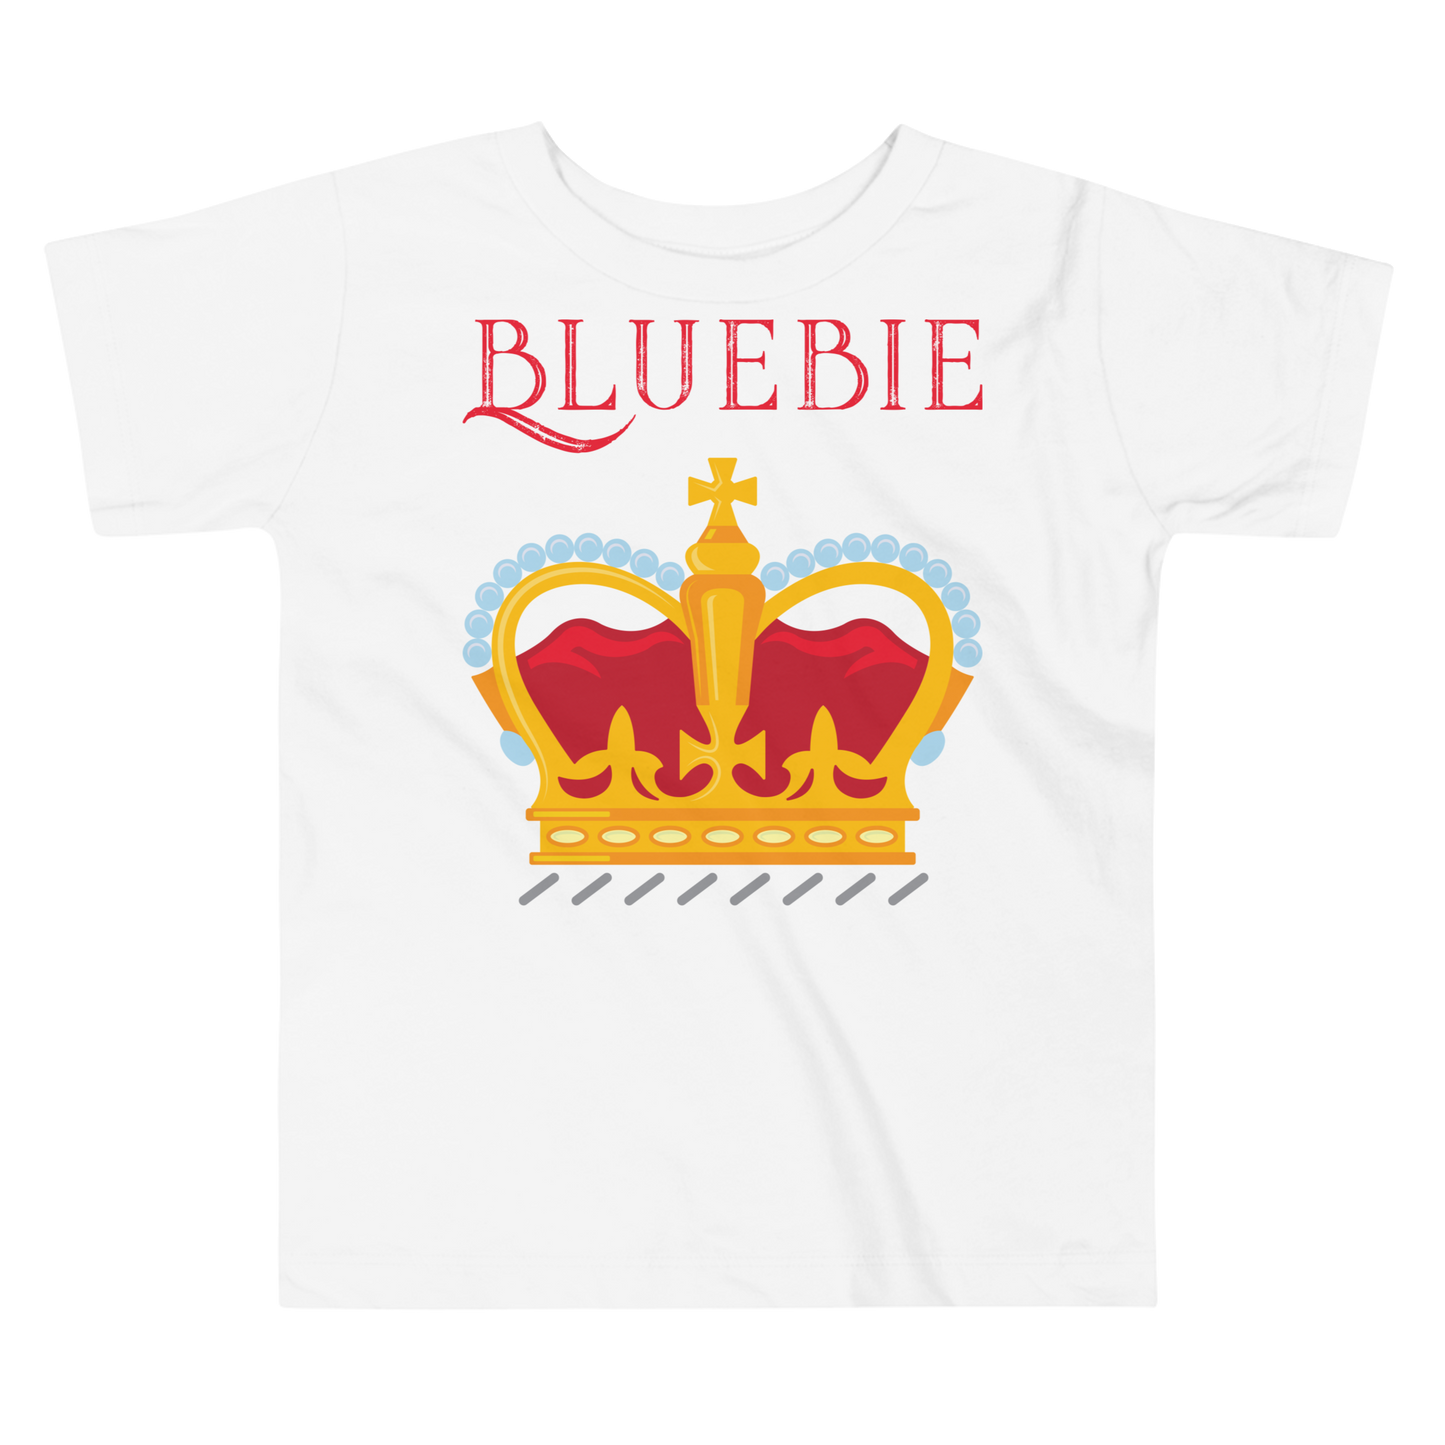 Queen Bluebie - Toddler Short Sleeve Tee